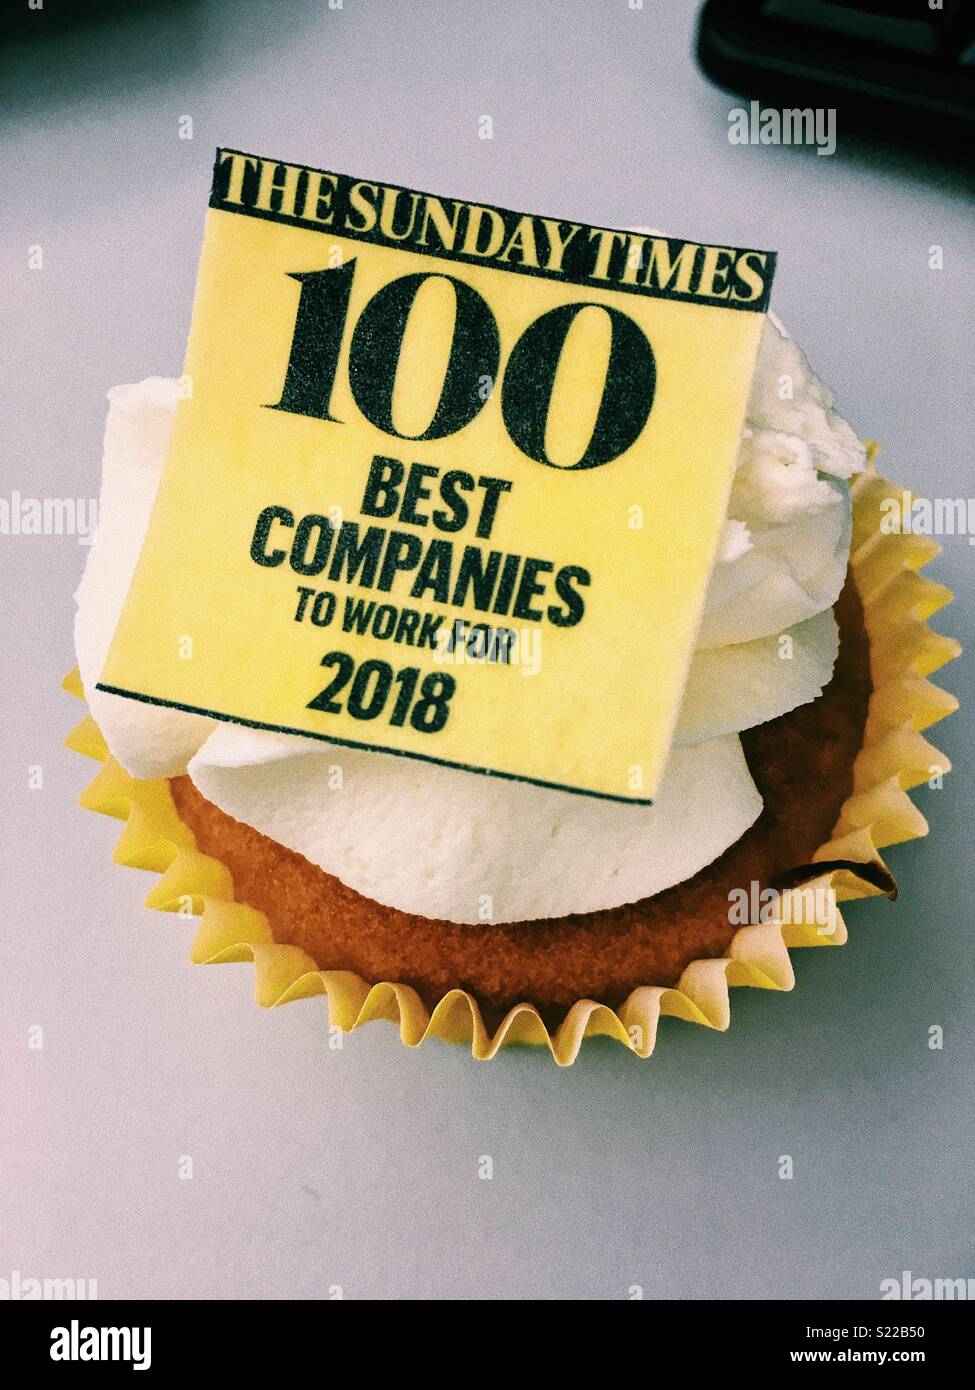 100 best companies 2018 cupcake Stock Photo